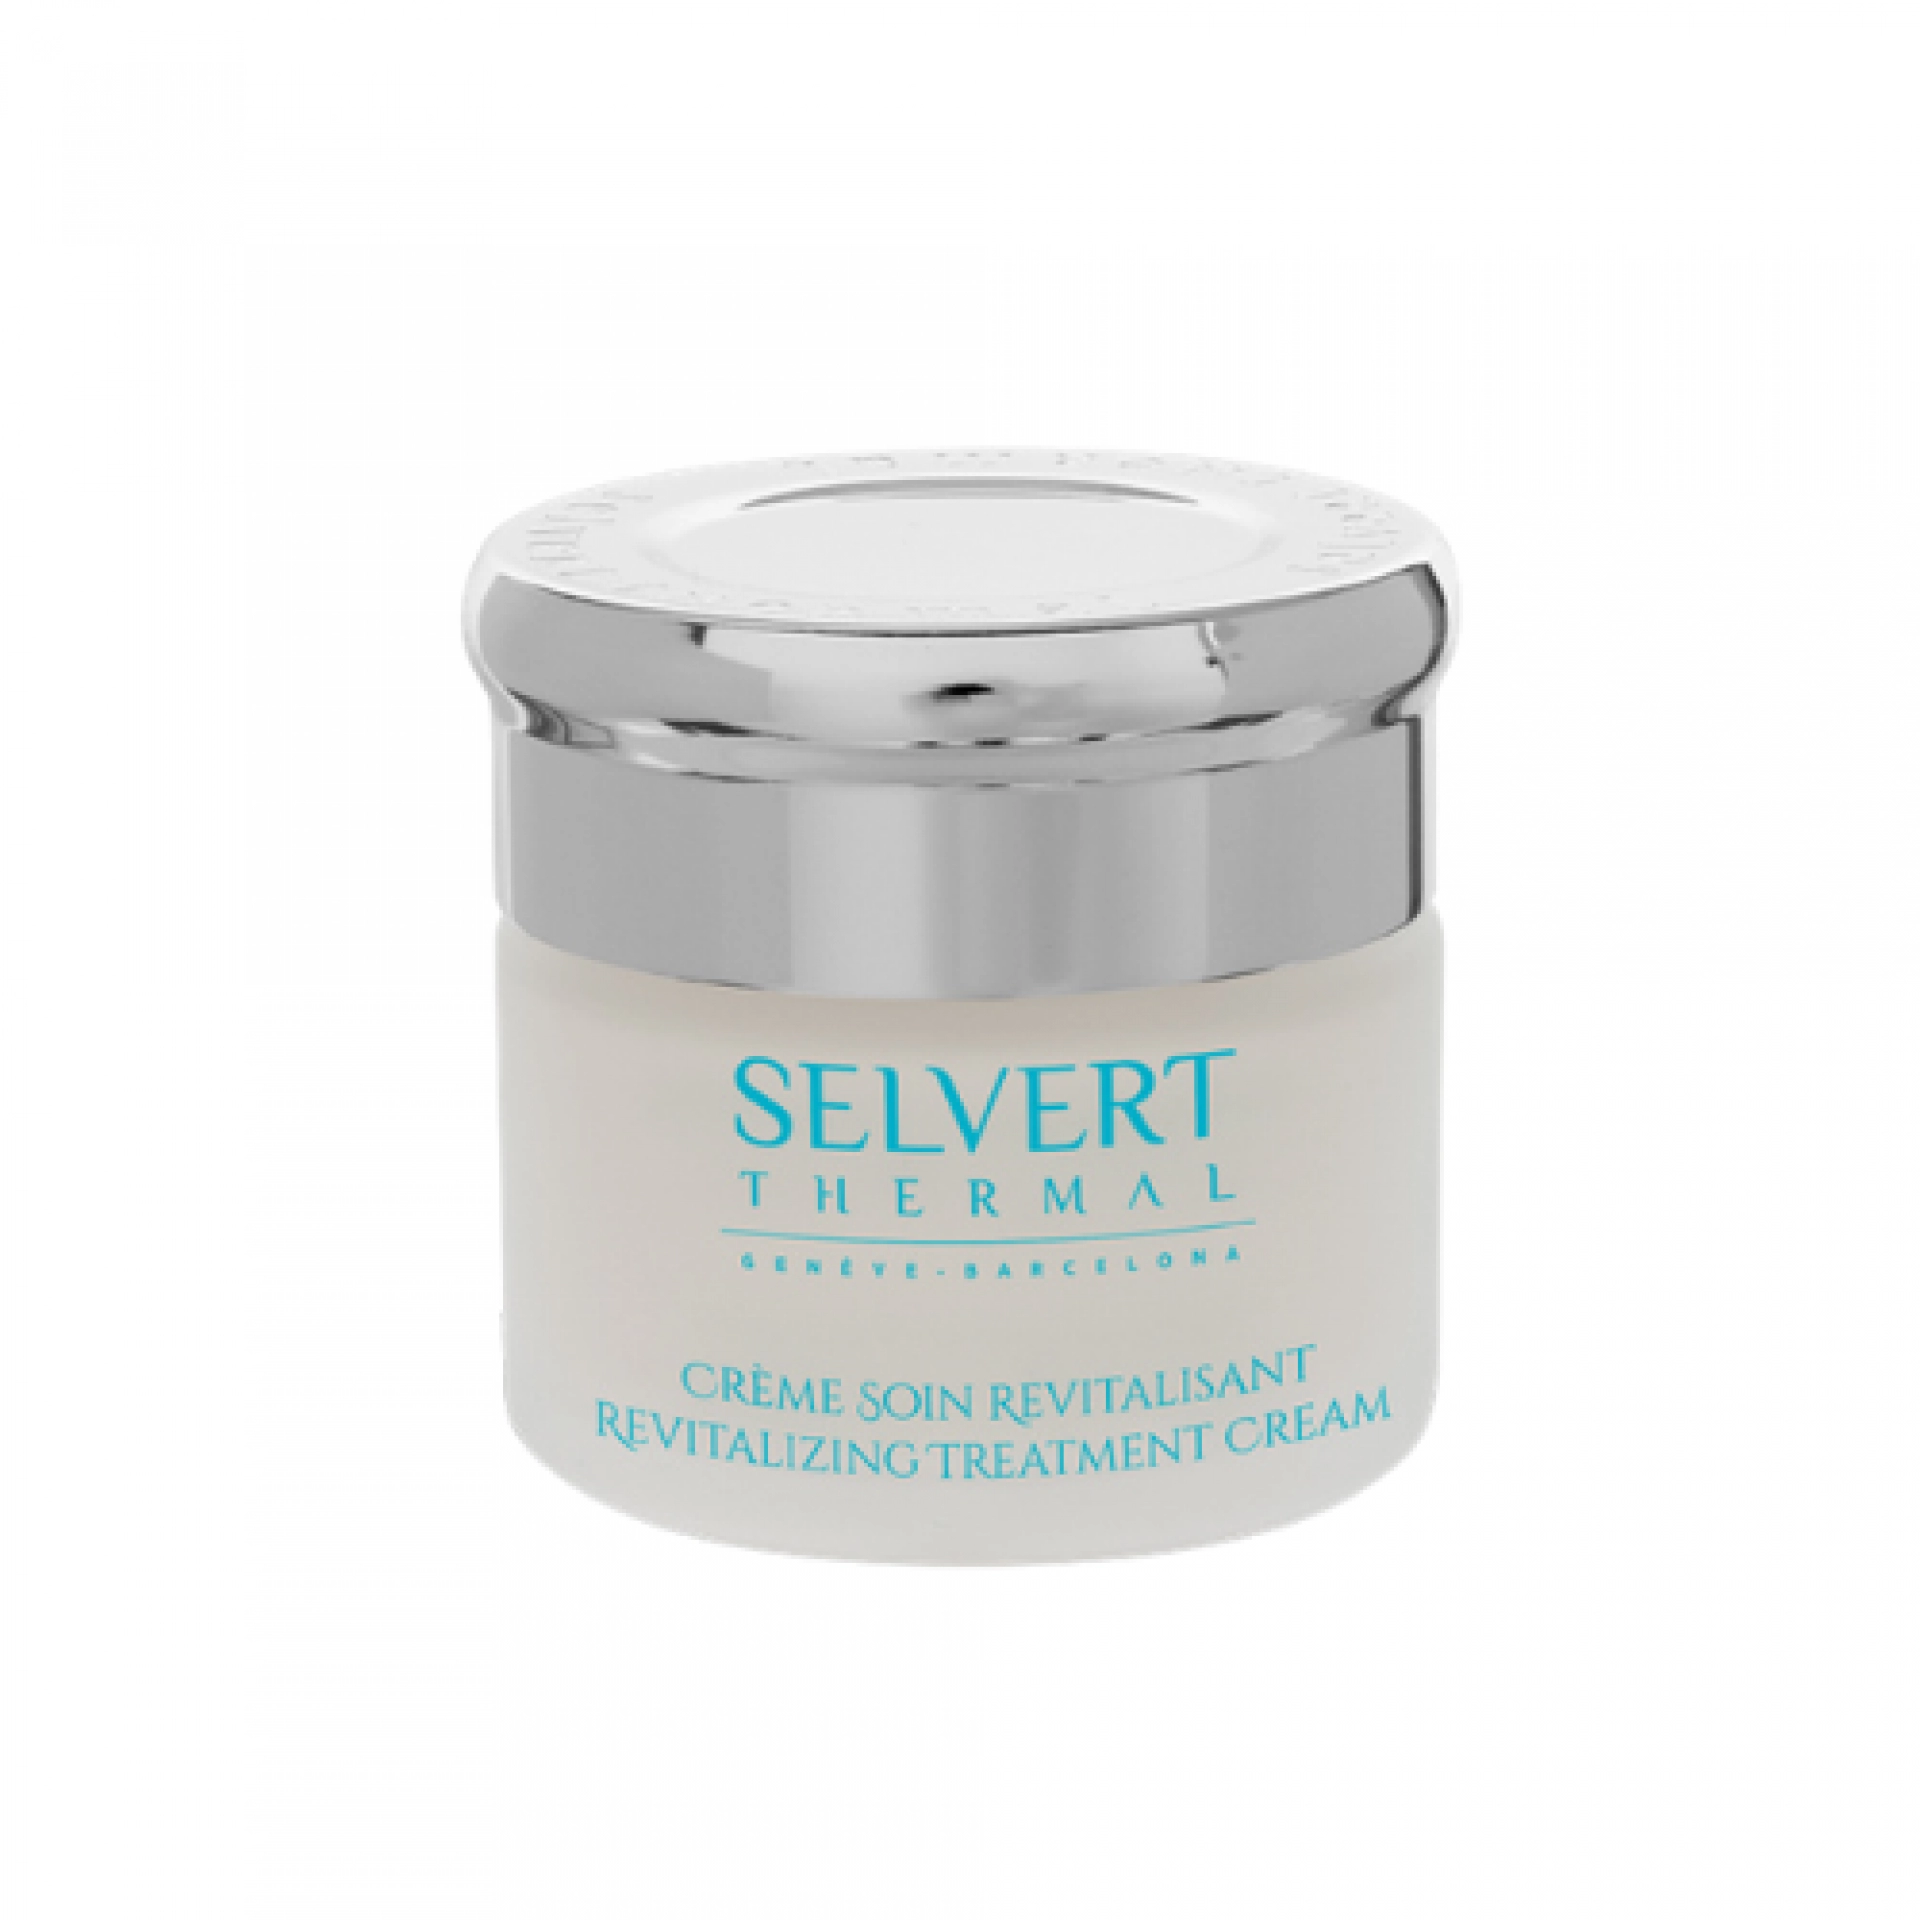 Revitalizing Treatment Cream | Crema regeneradora 50ml - Ligne Pour le Visage - Selvert Thermal ®